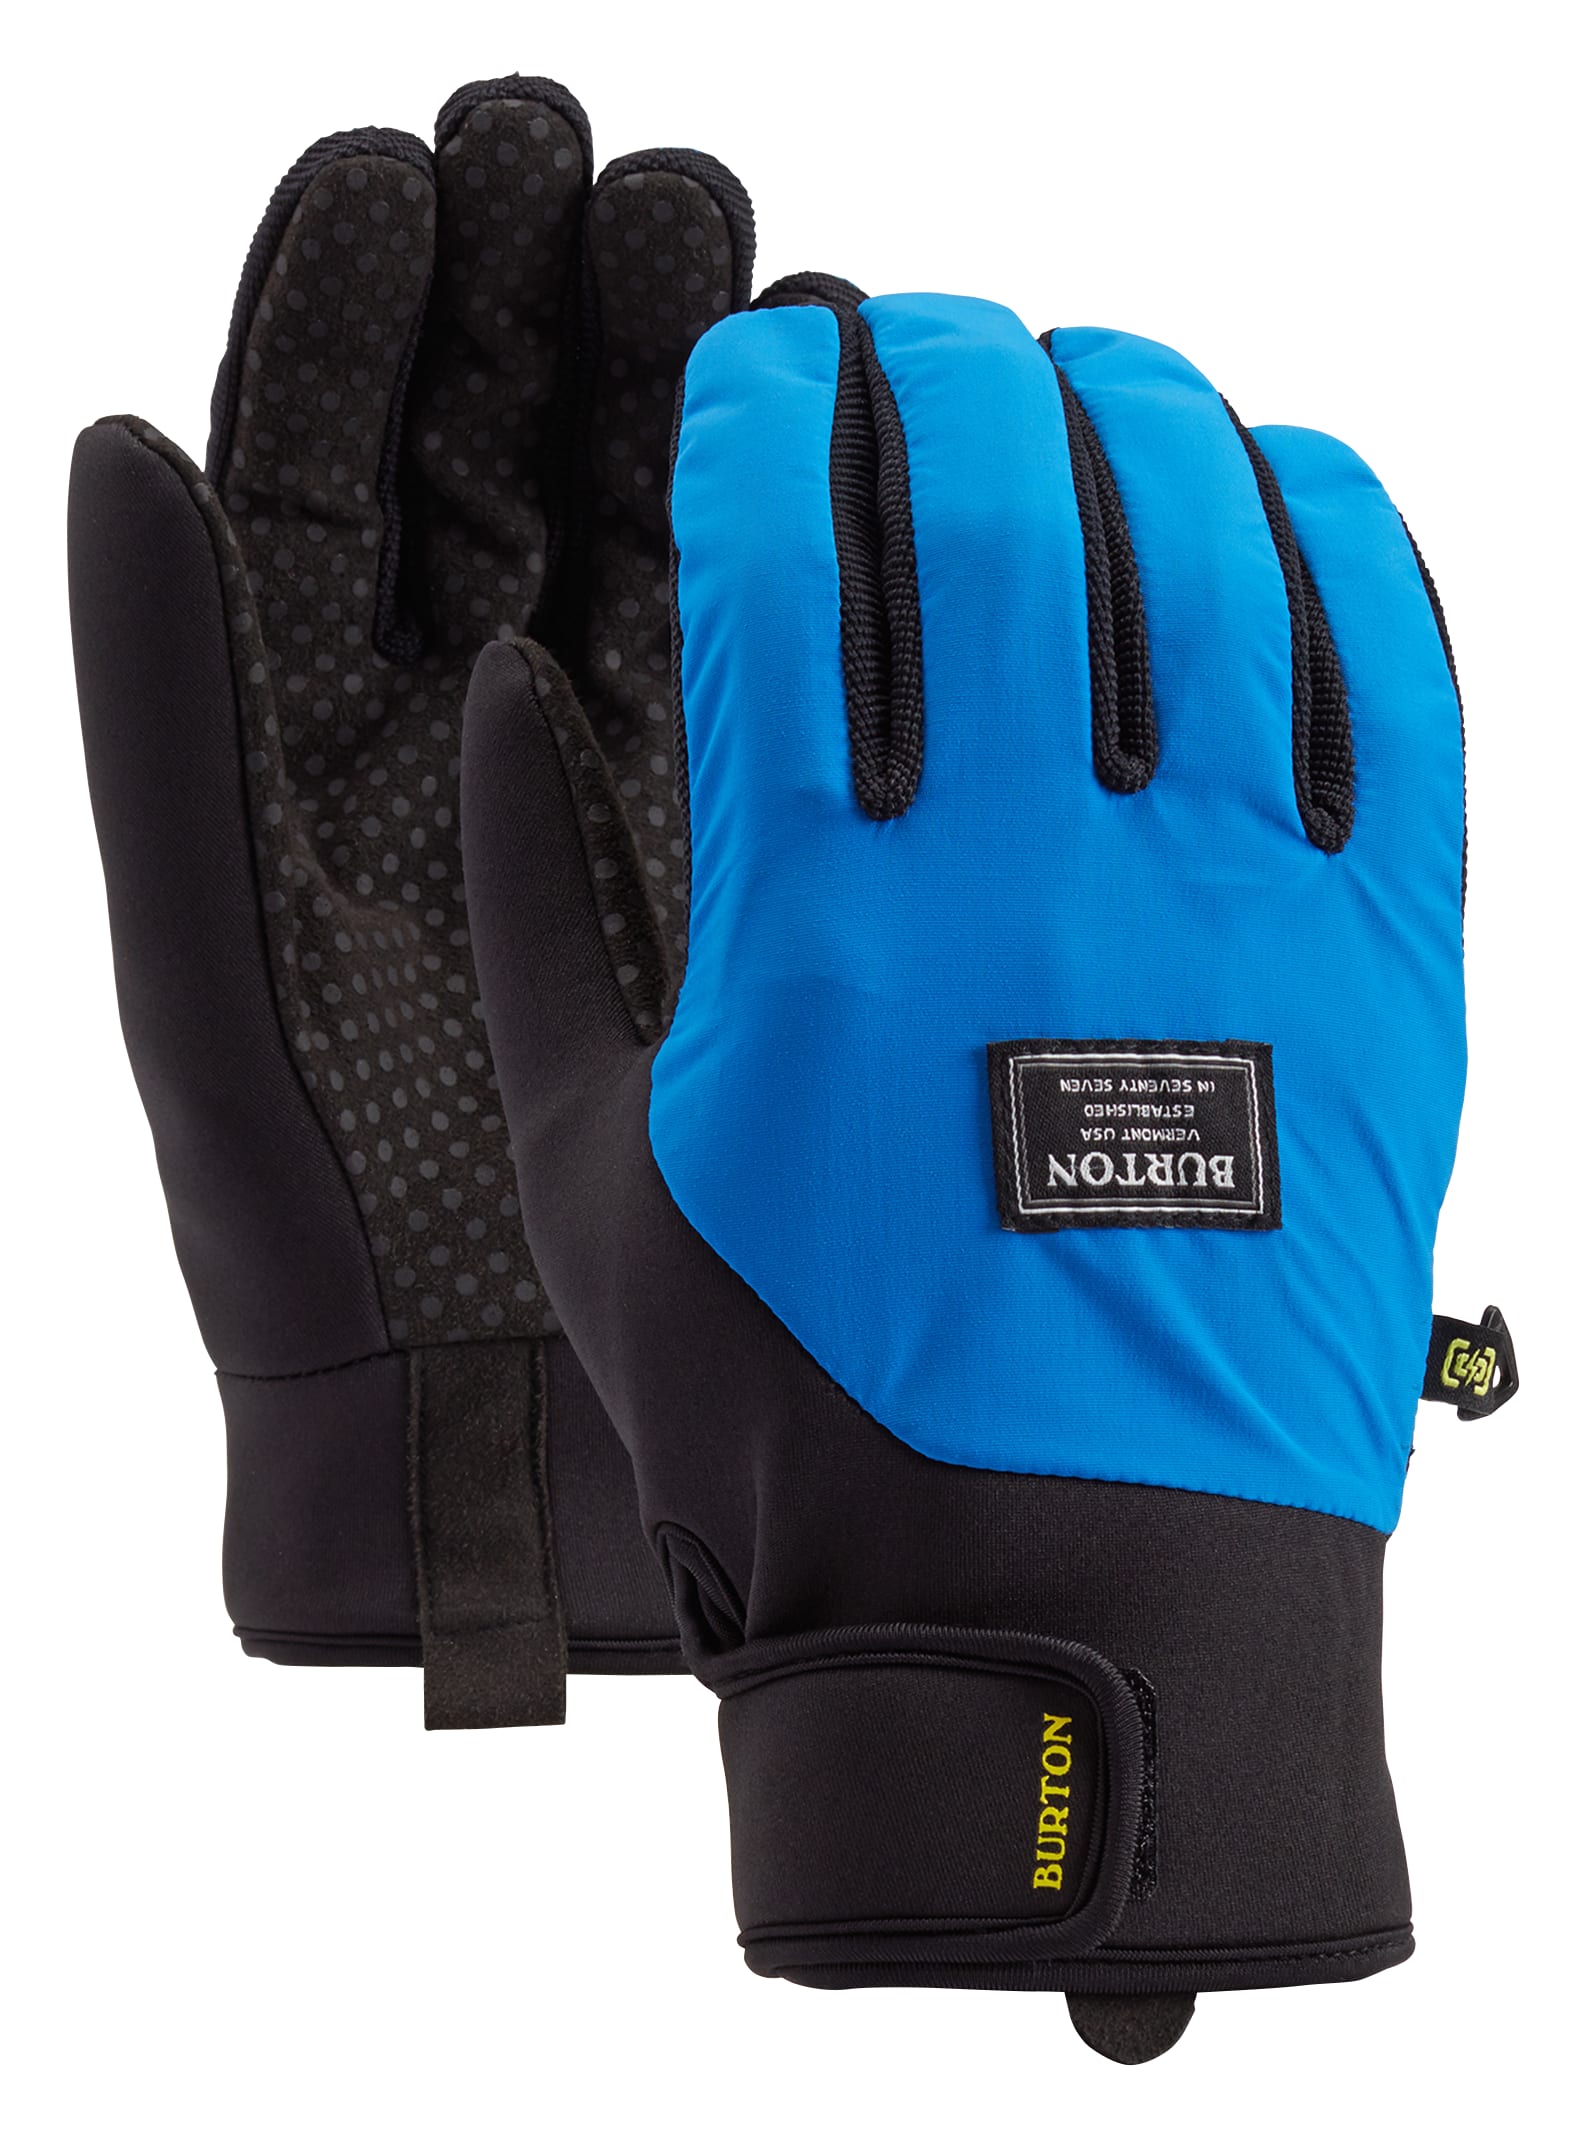 Burton Park Glove | Burton.com Winter 2021 GB